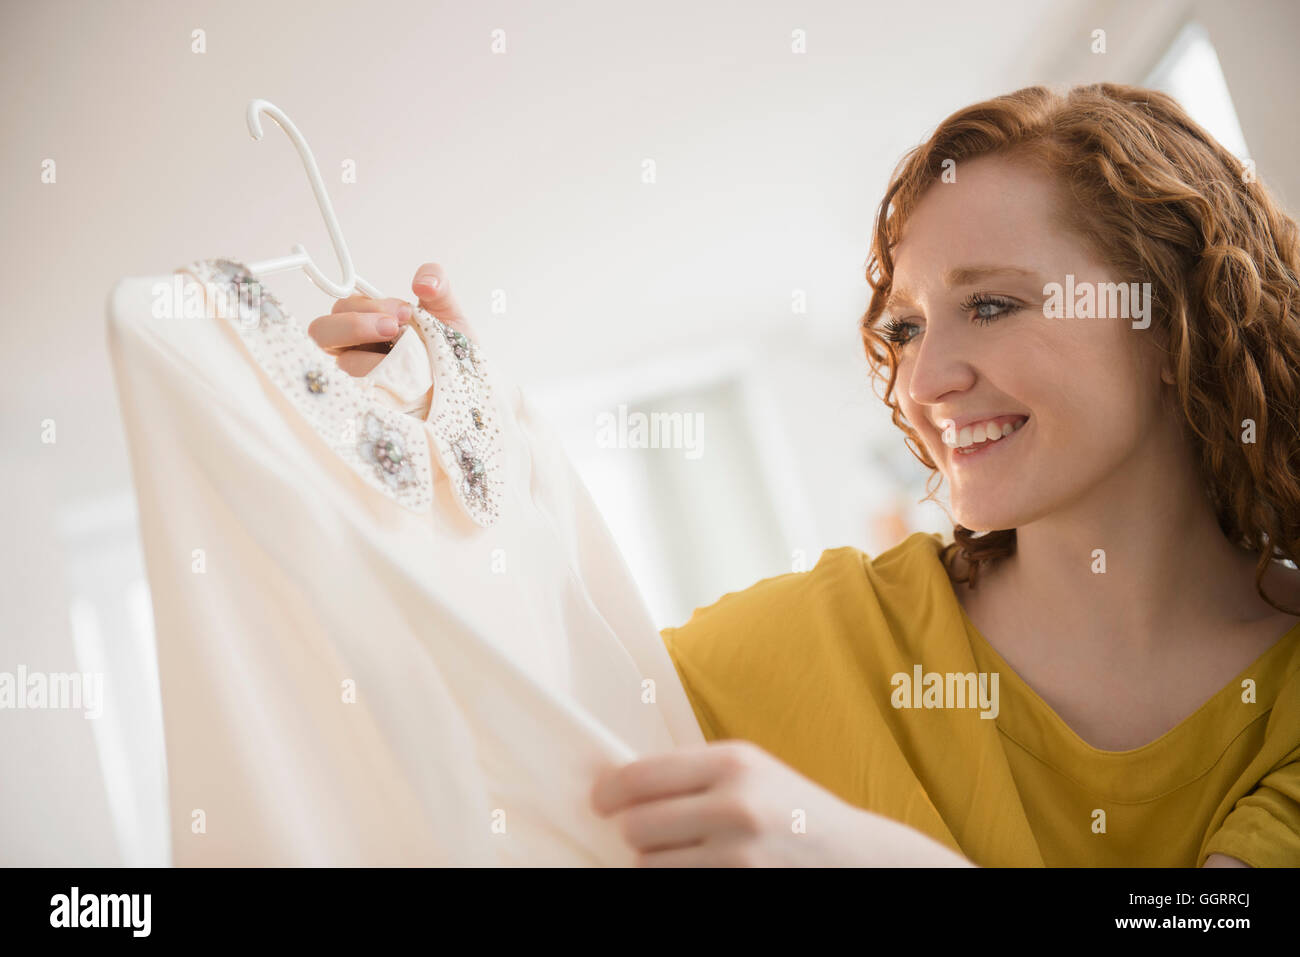 Smiling Caucasian woman holding blouse on coathanger Stock Photo